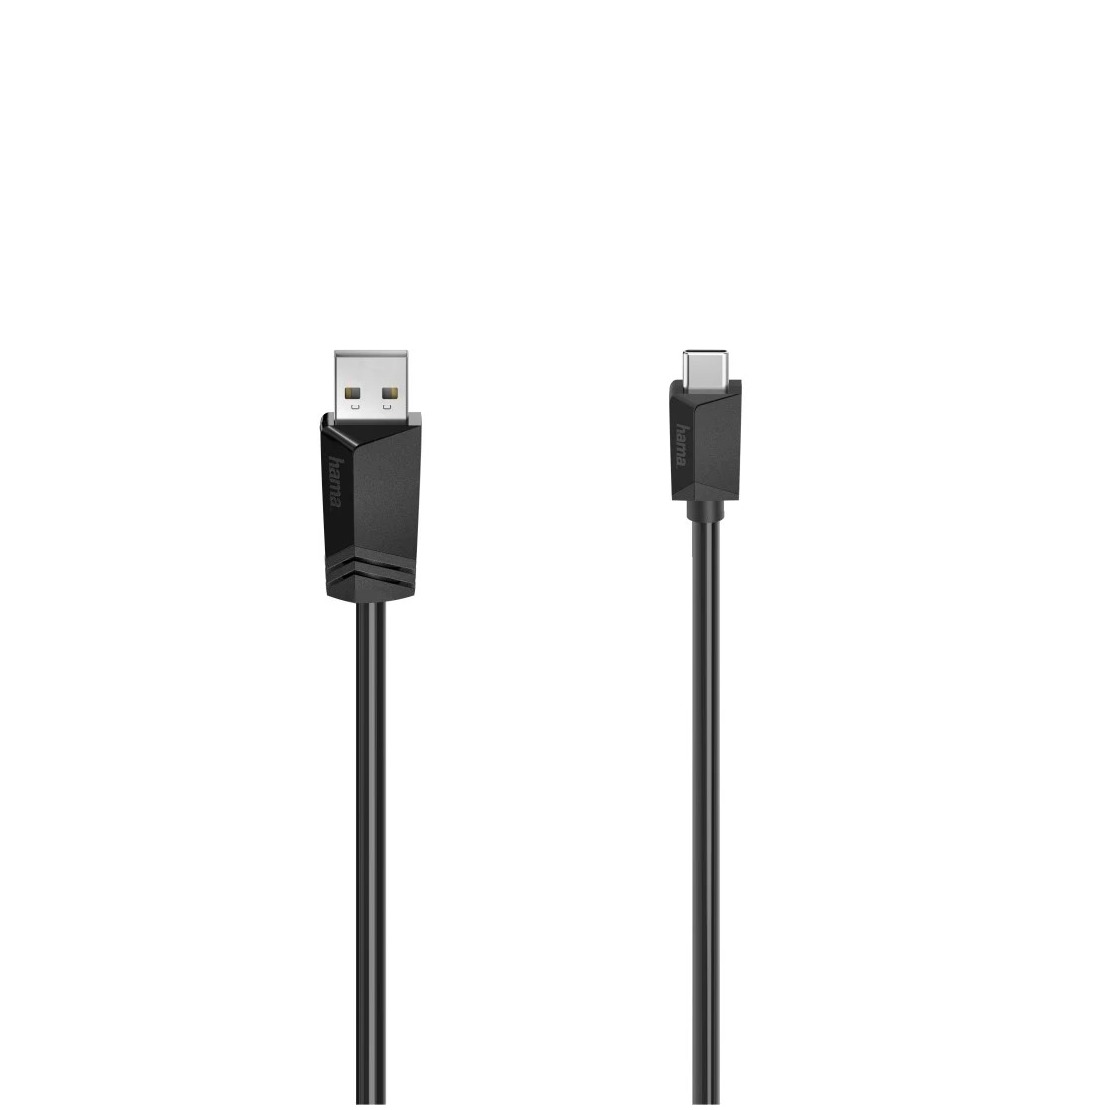 Hama USB kabel Type-C naar USB 2.0 Type-A 480Mbit/s, 1,5m Kabel Zwart